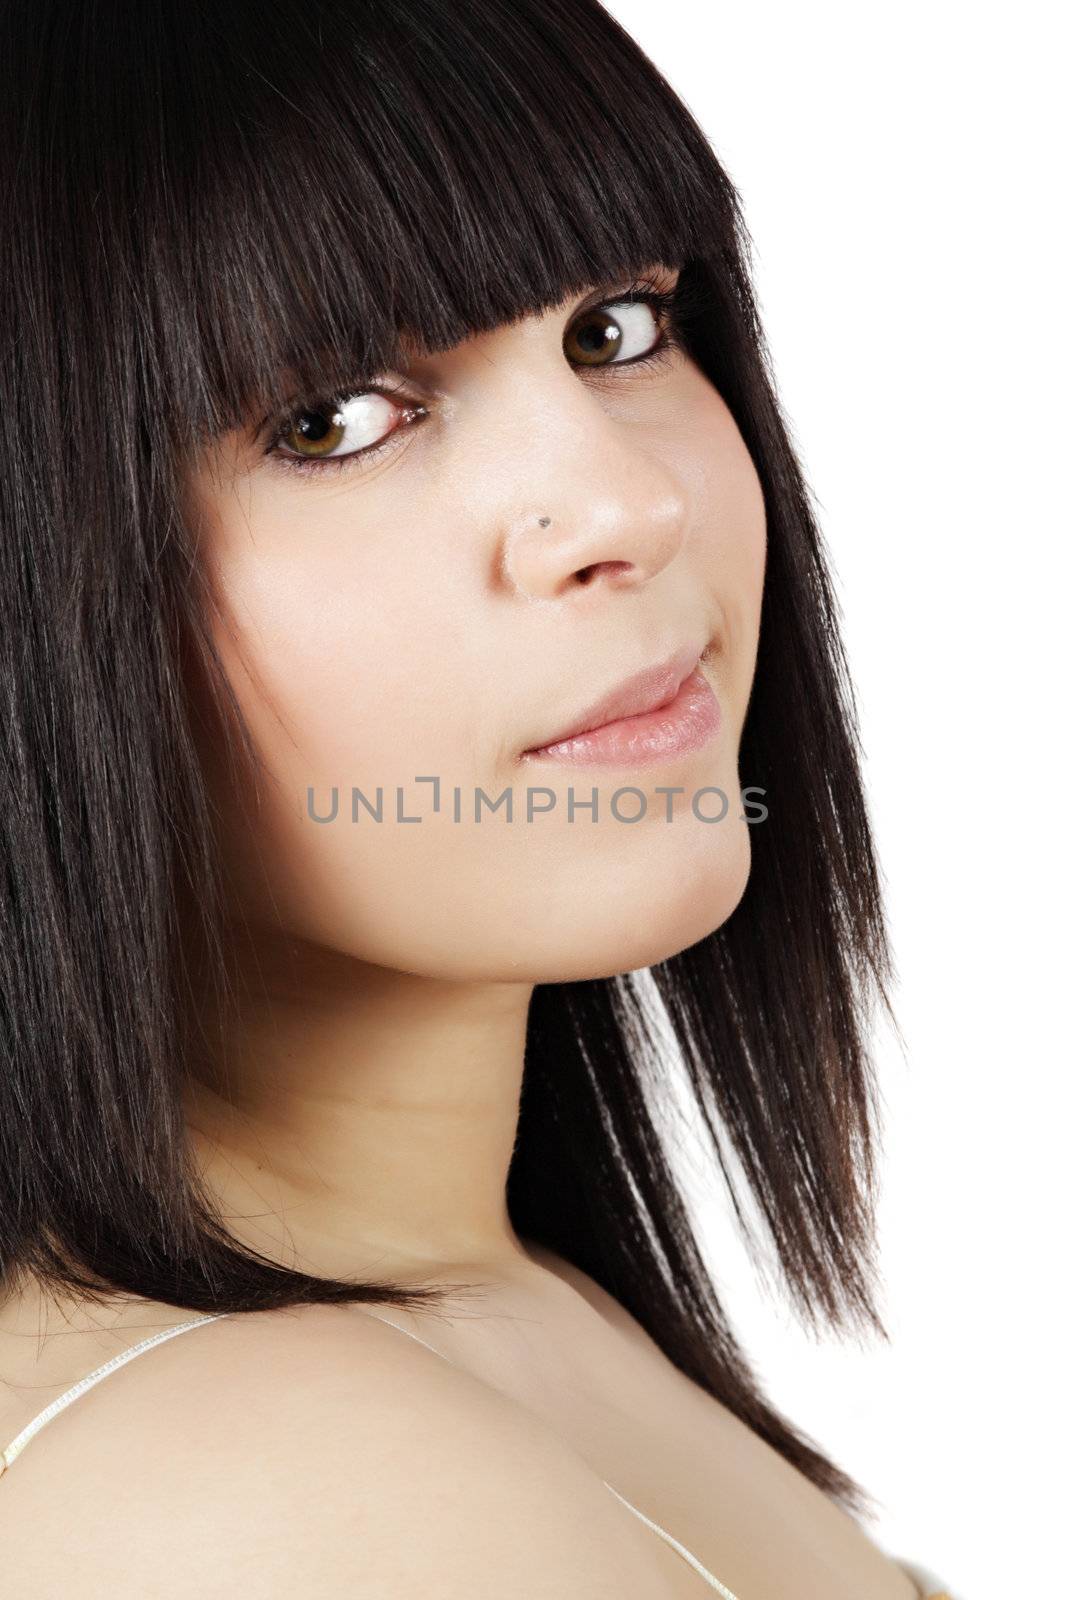 portrait of pretty teen girl, white background